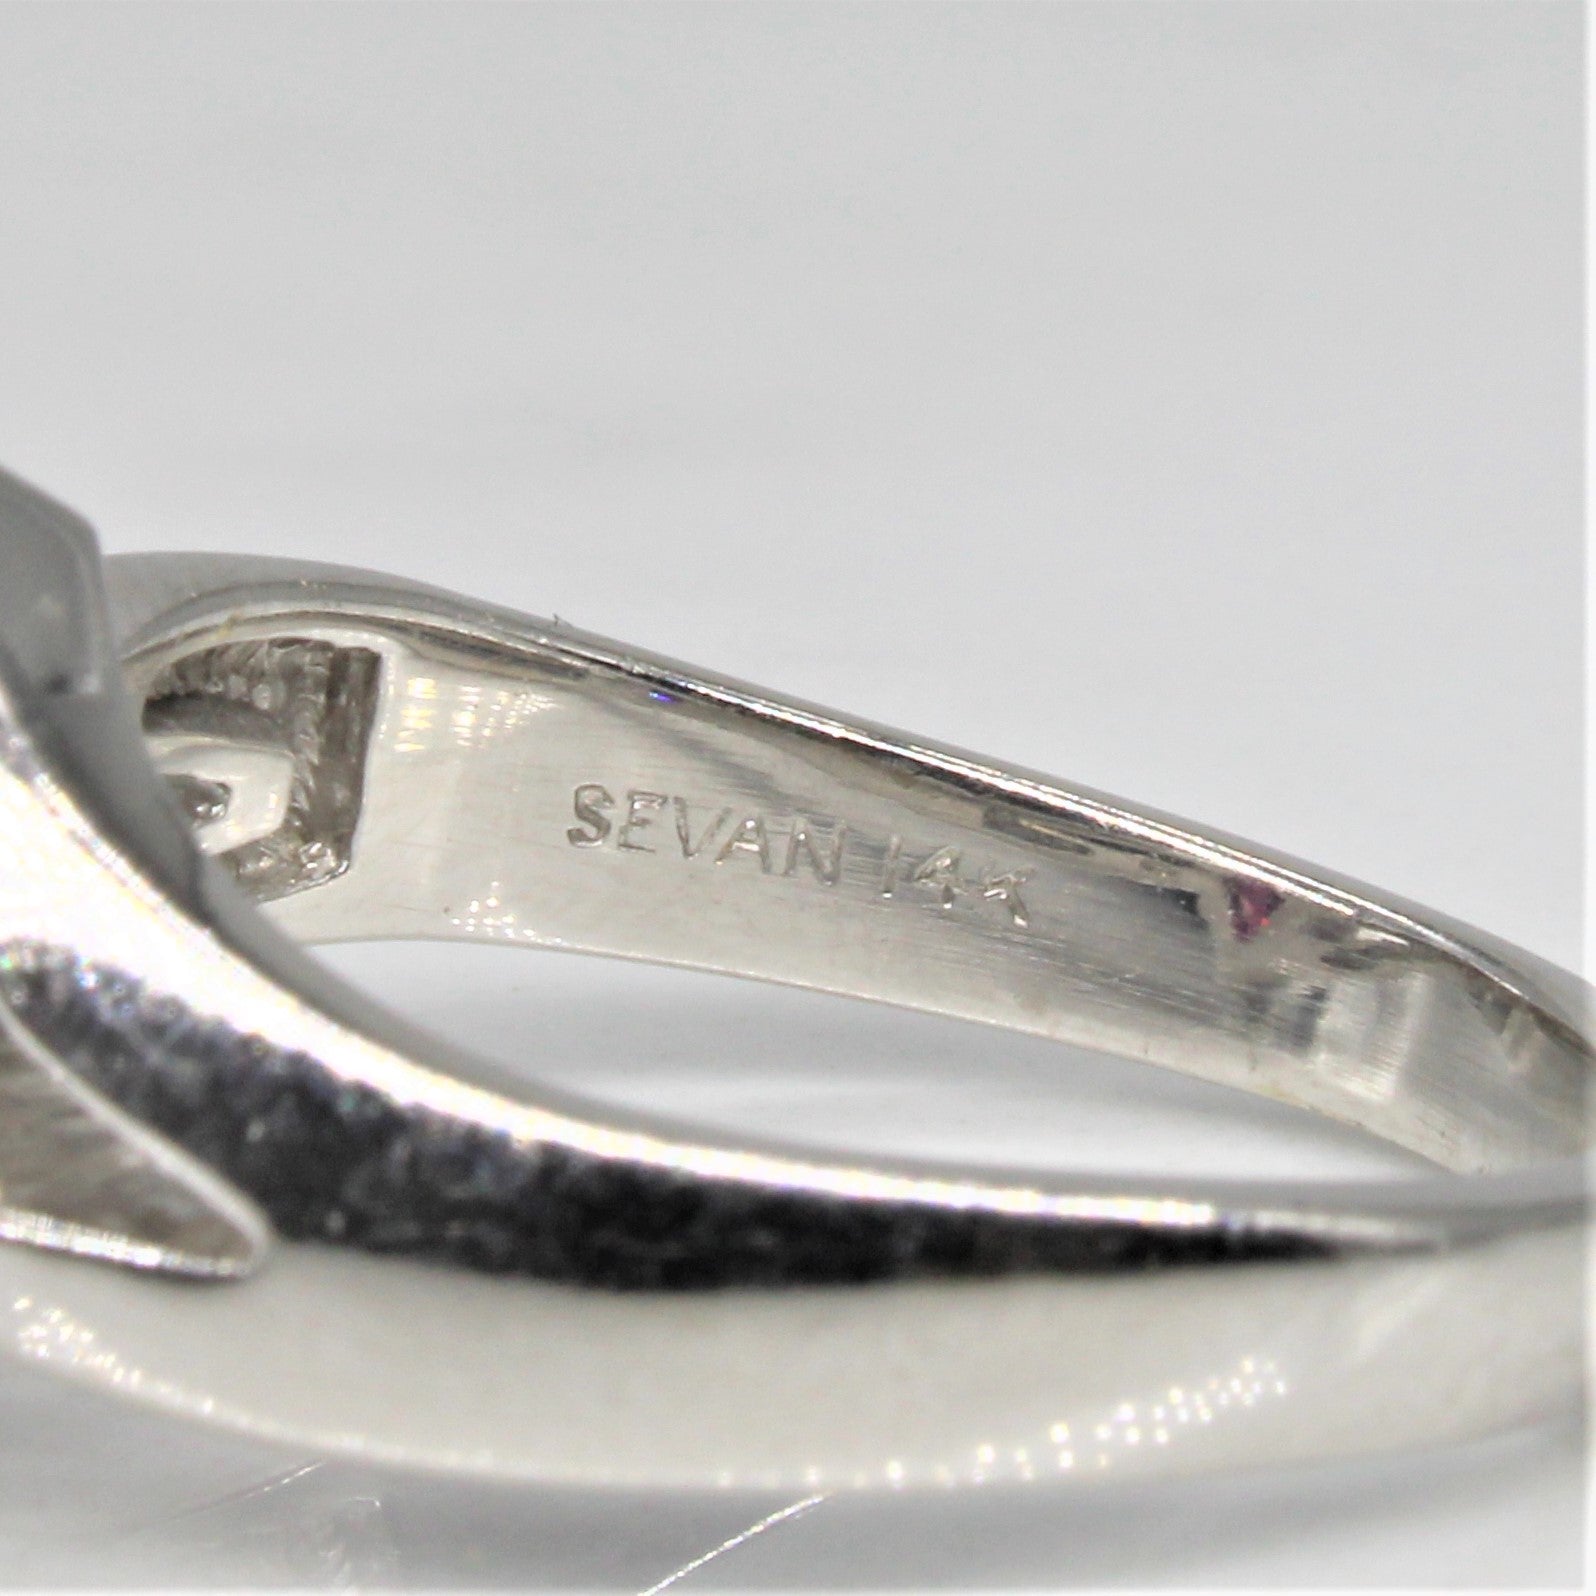 Marquise Garnet & Diamond Ring | 1.85ct, 0.08ctw | SZ 8.25 |